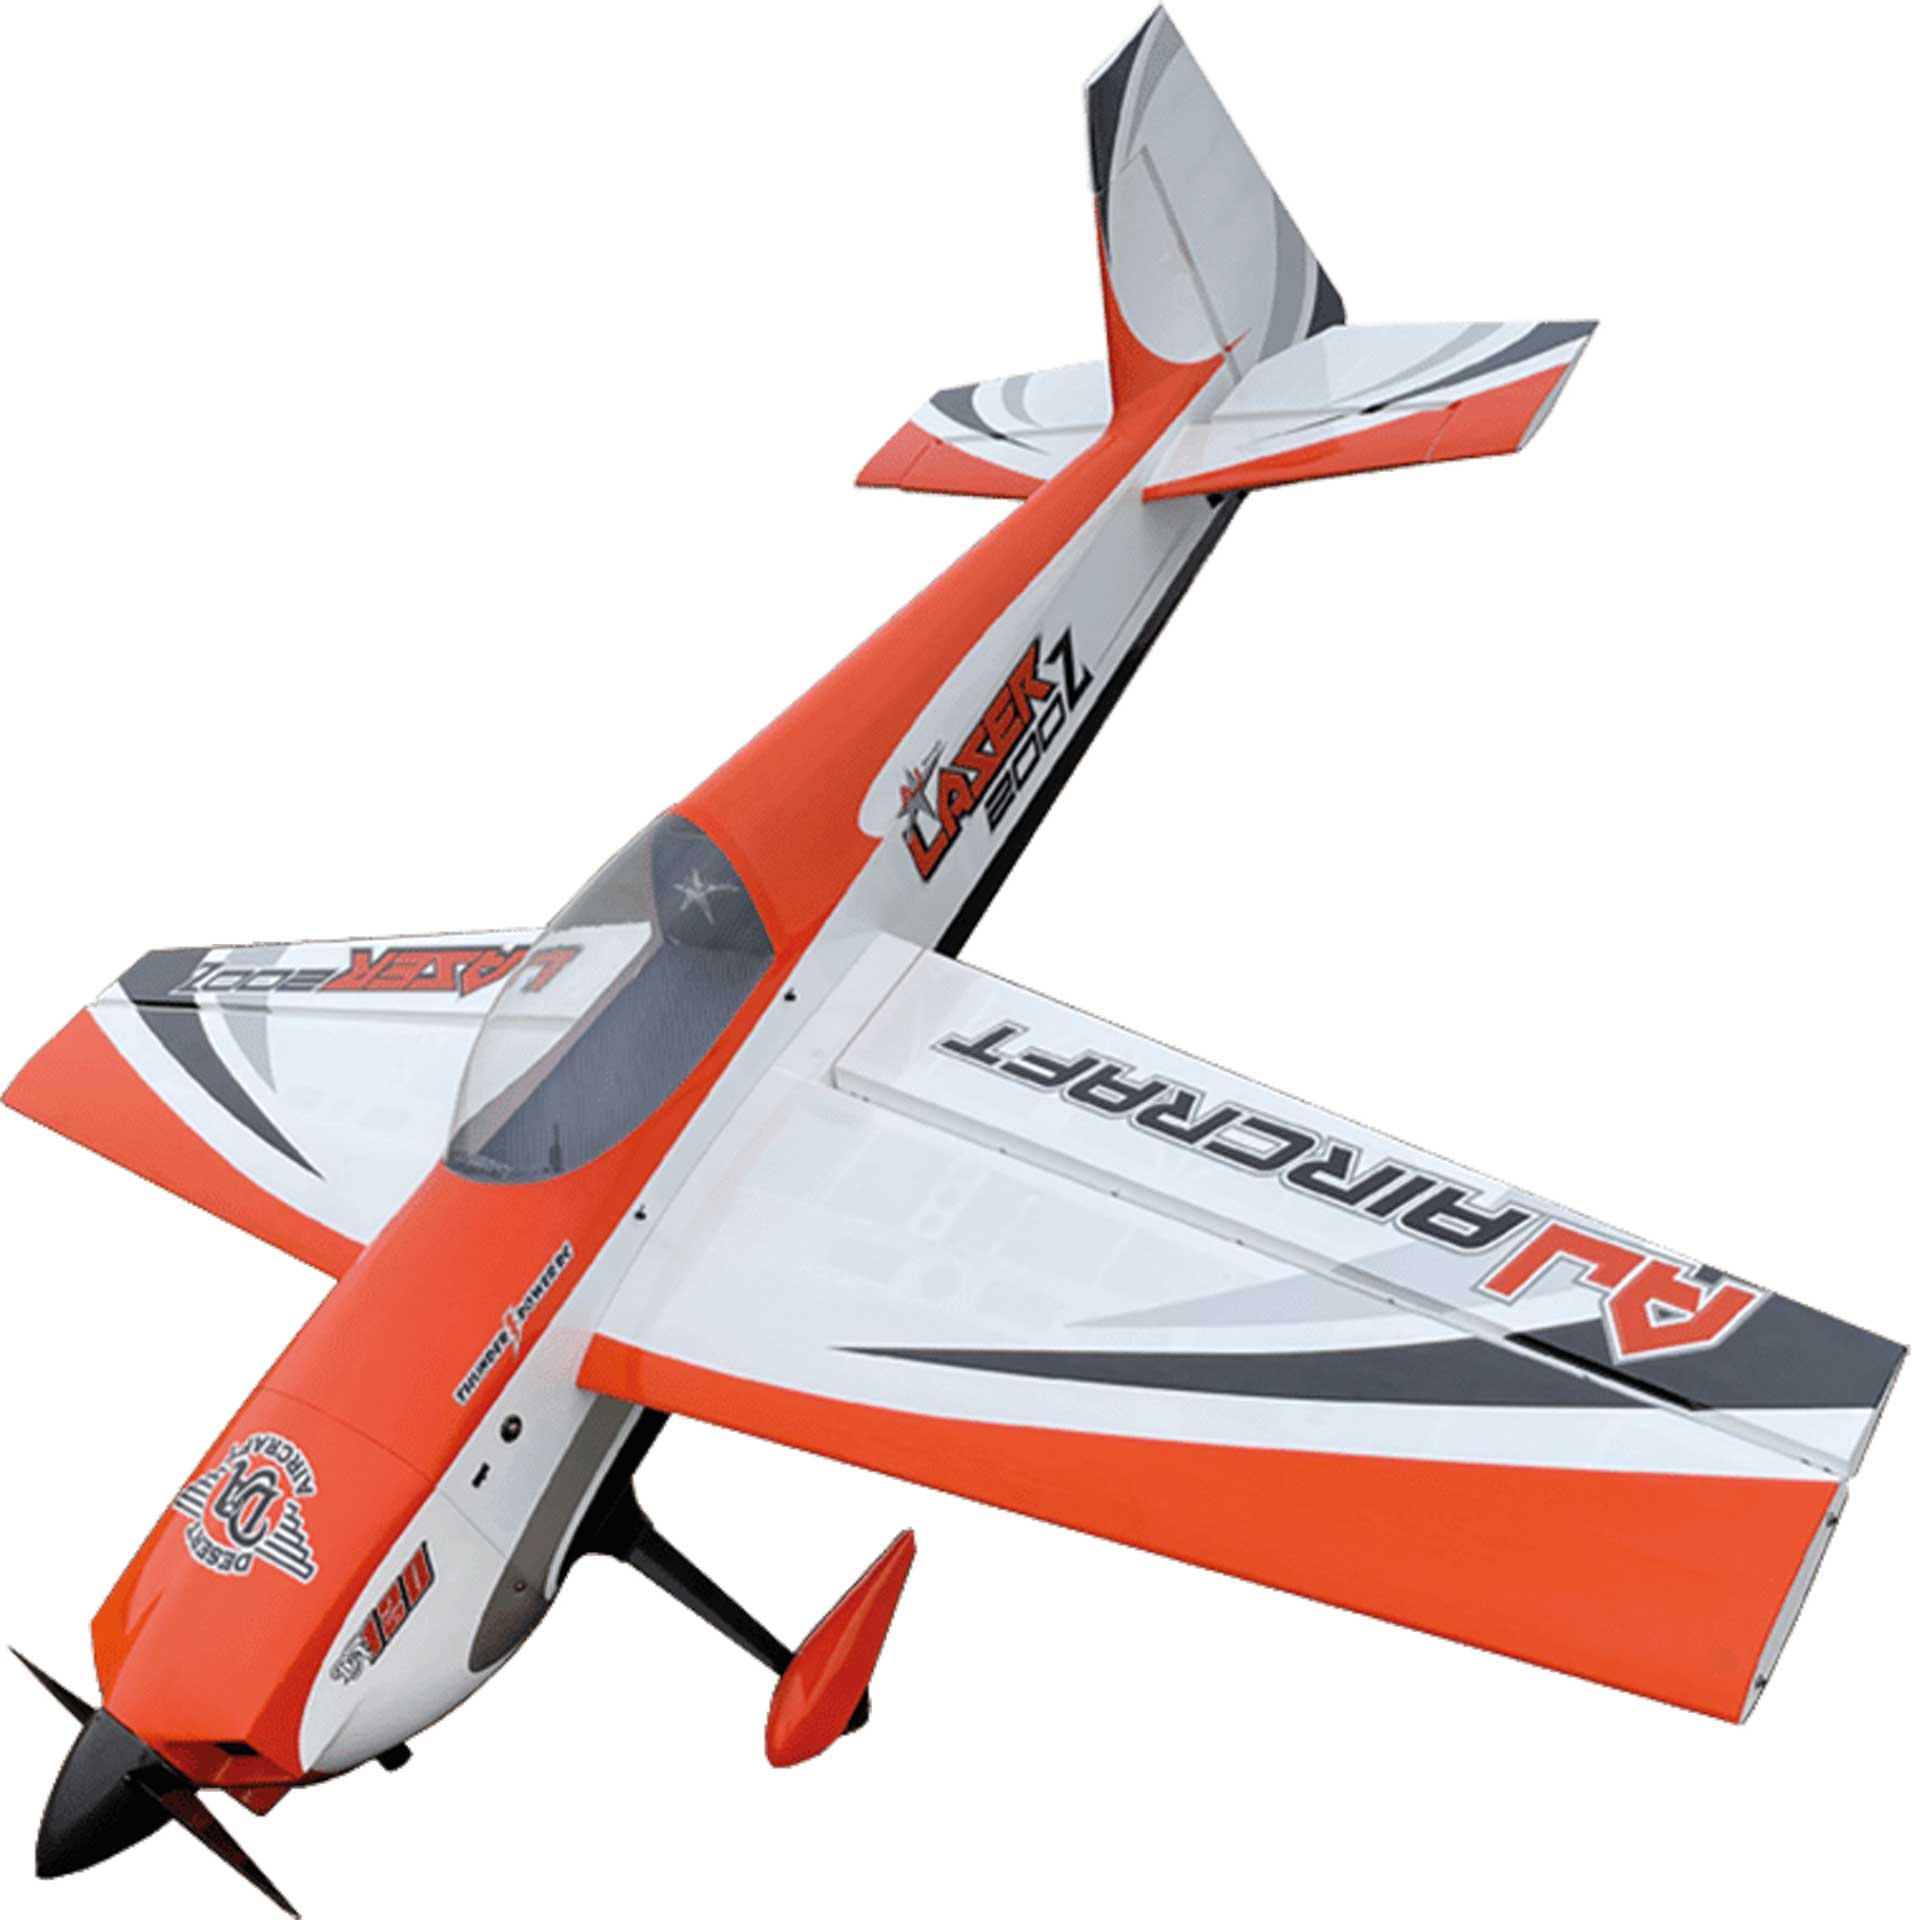 AJ AIRCRAFT Laser z200 ARF 103" Orange Kunstflugmodell 2,61m